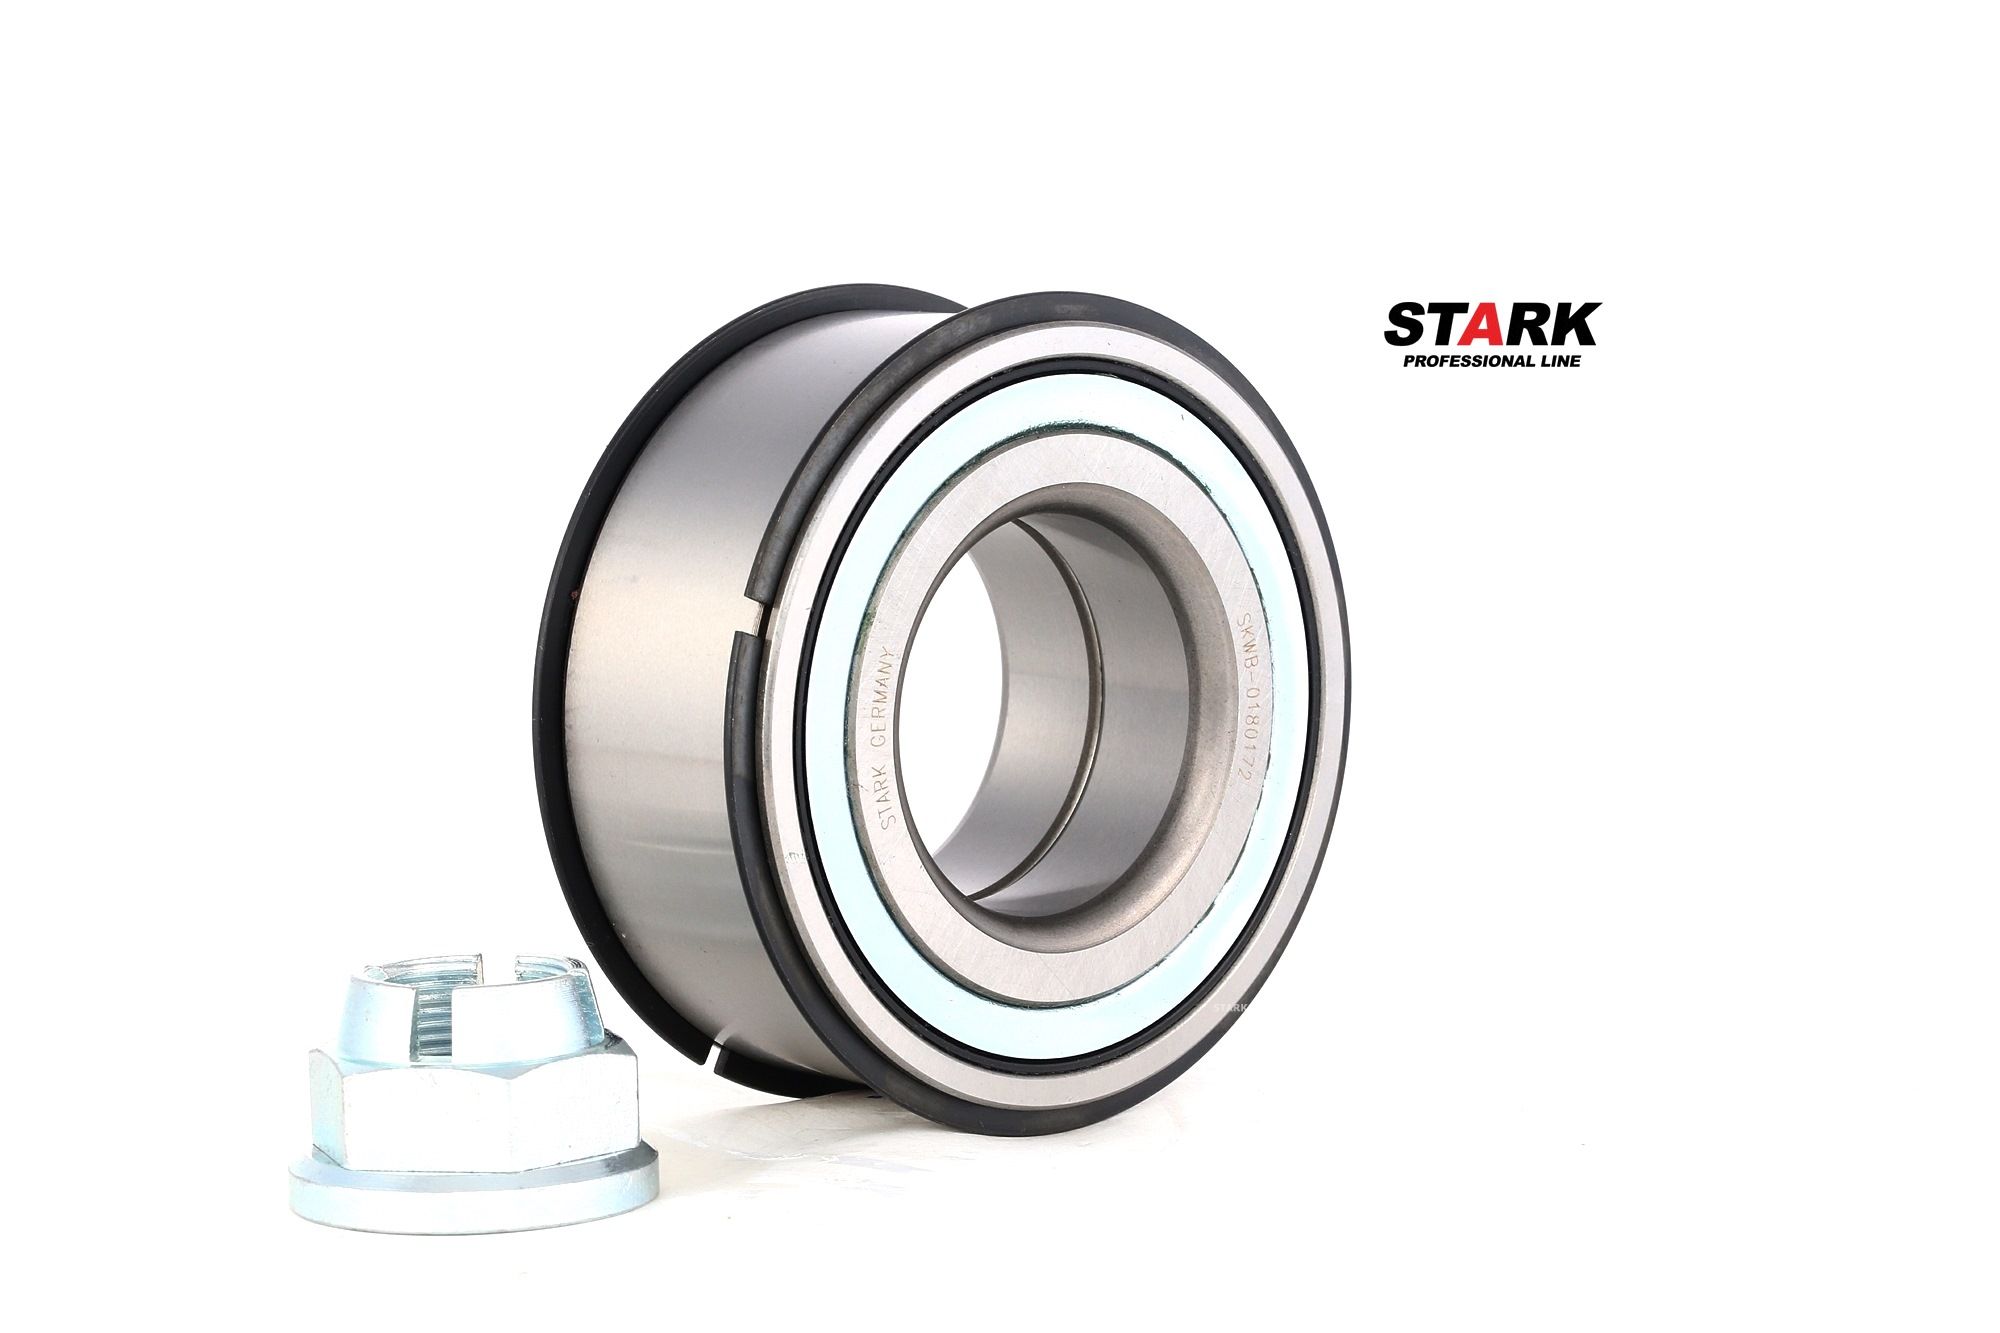 STARK SKWB-0180172 Wheel bearing kit Front axle both sides, 88 mm